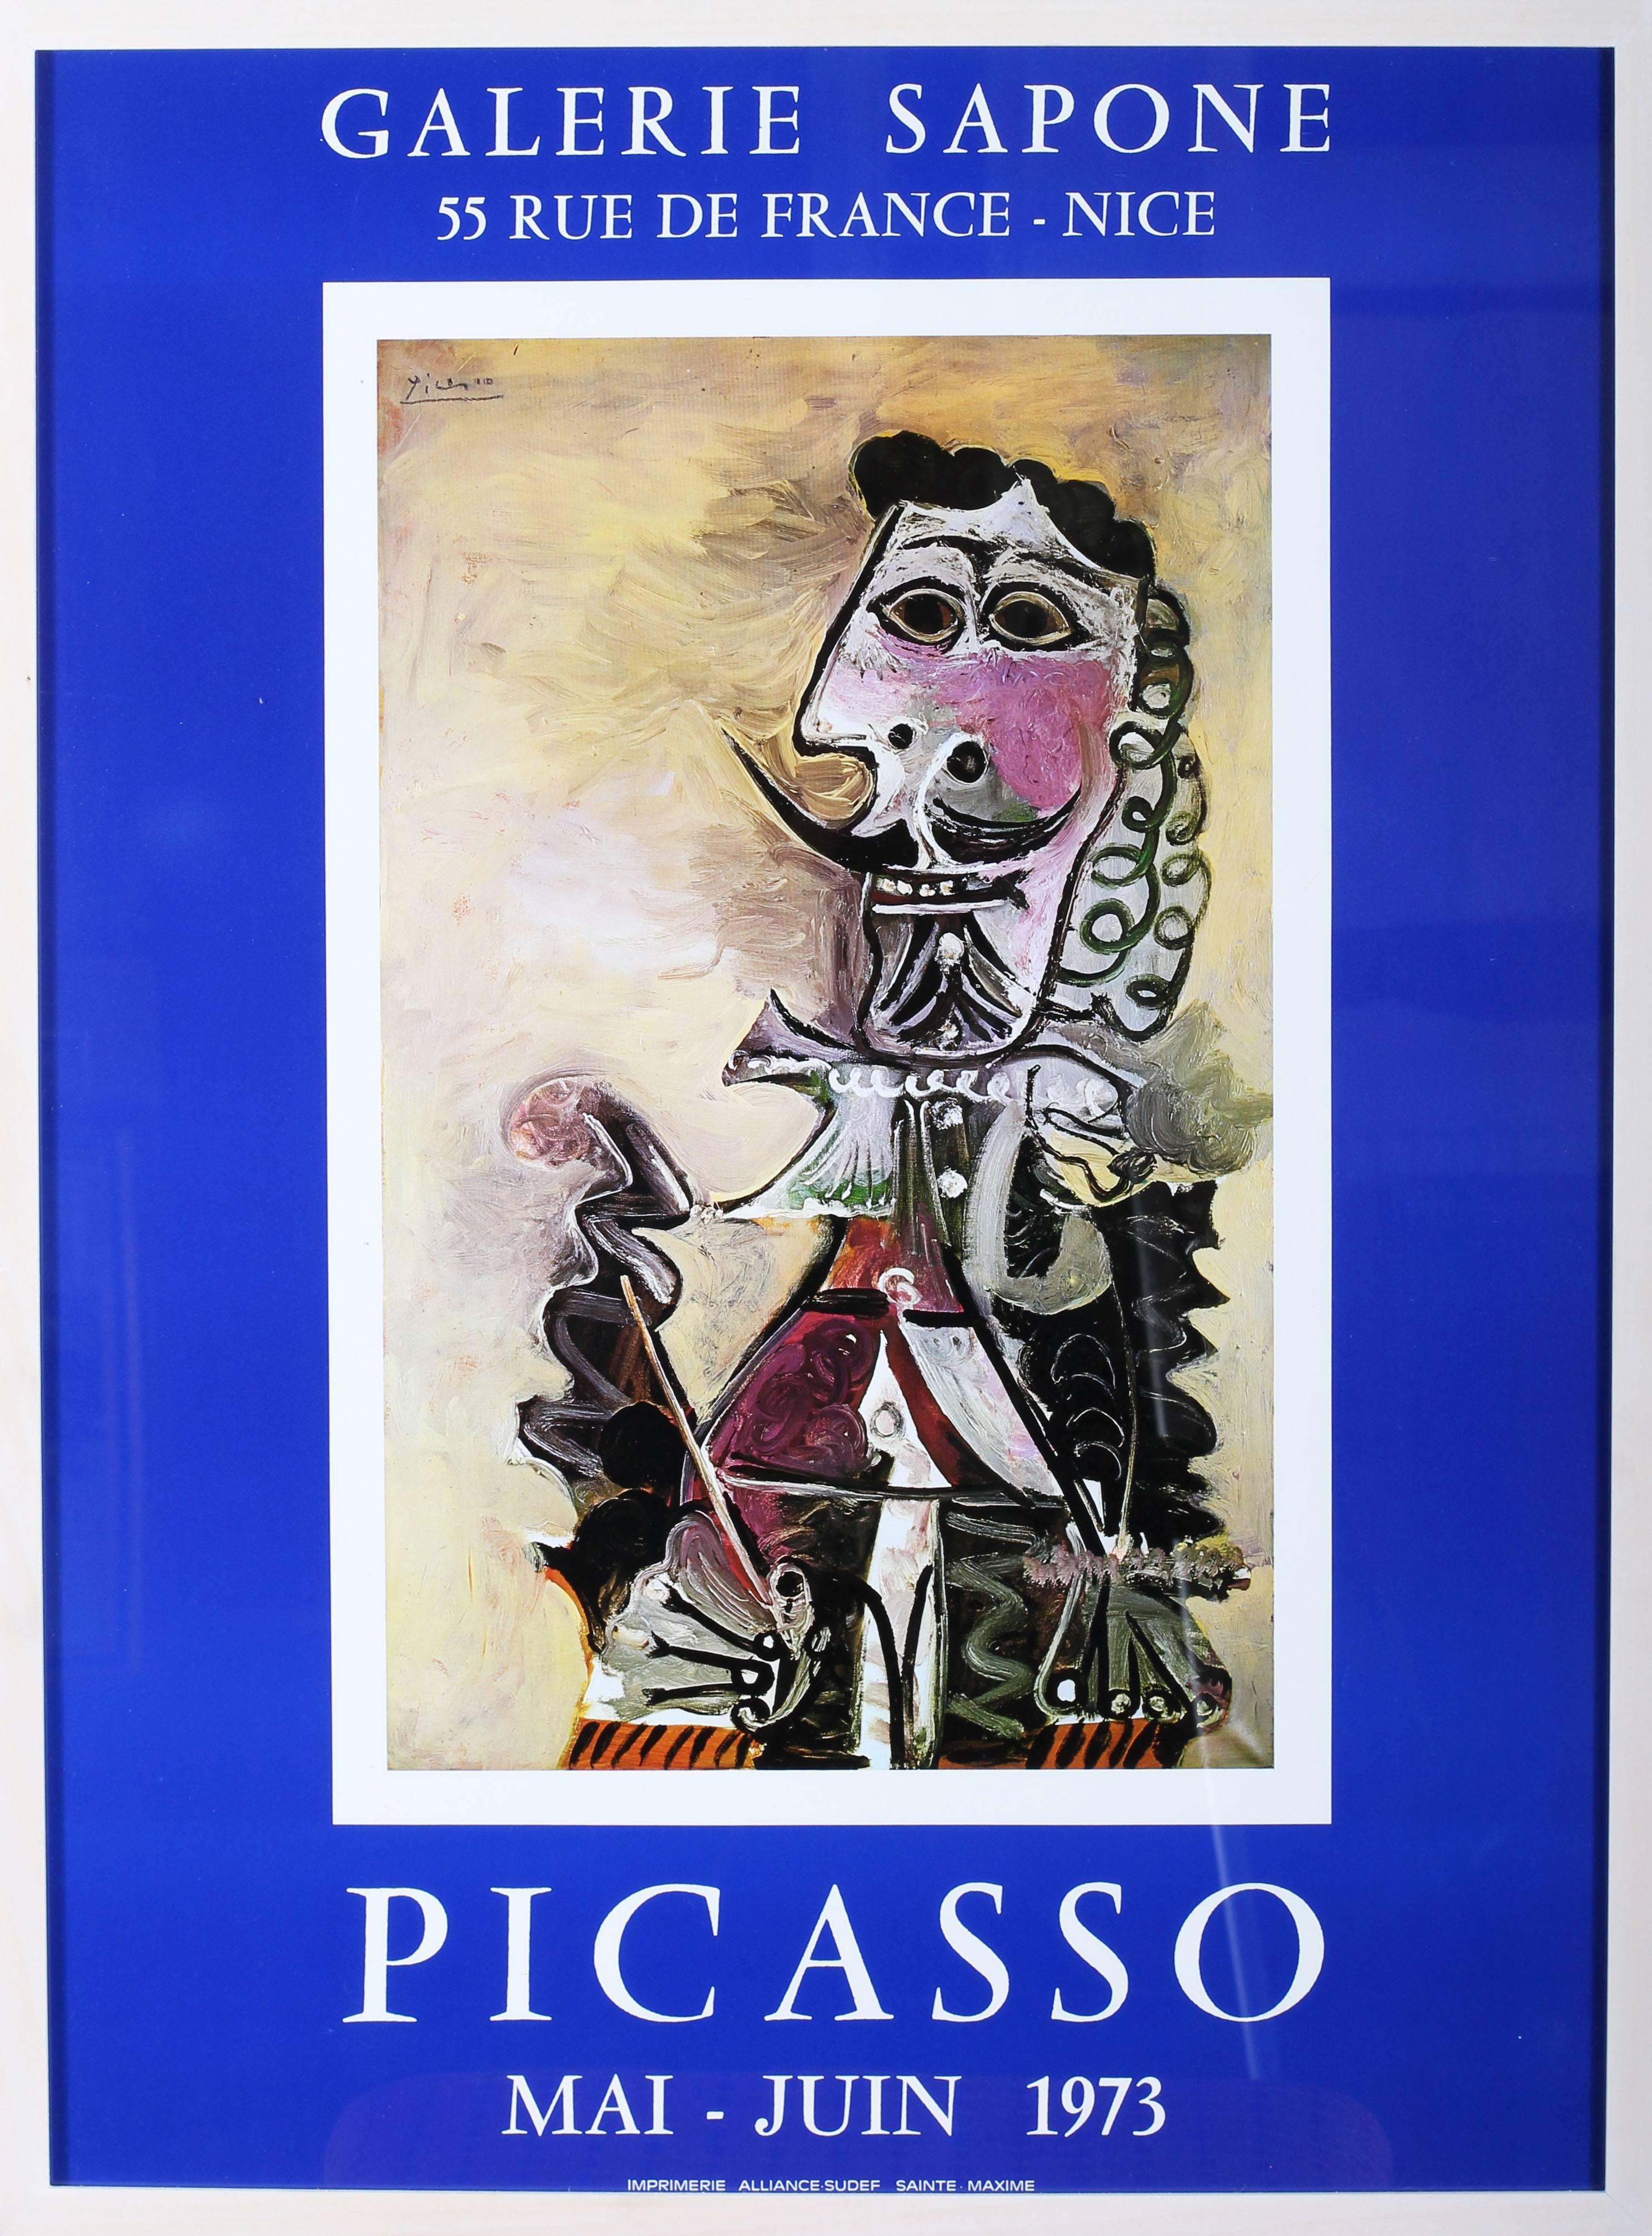 (after) Pablo Picasso Figurative Print - Picasso, Galerie Sapone, 1973